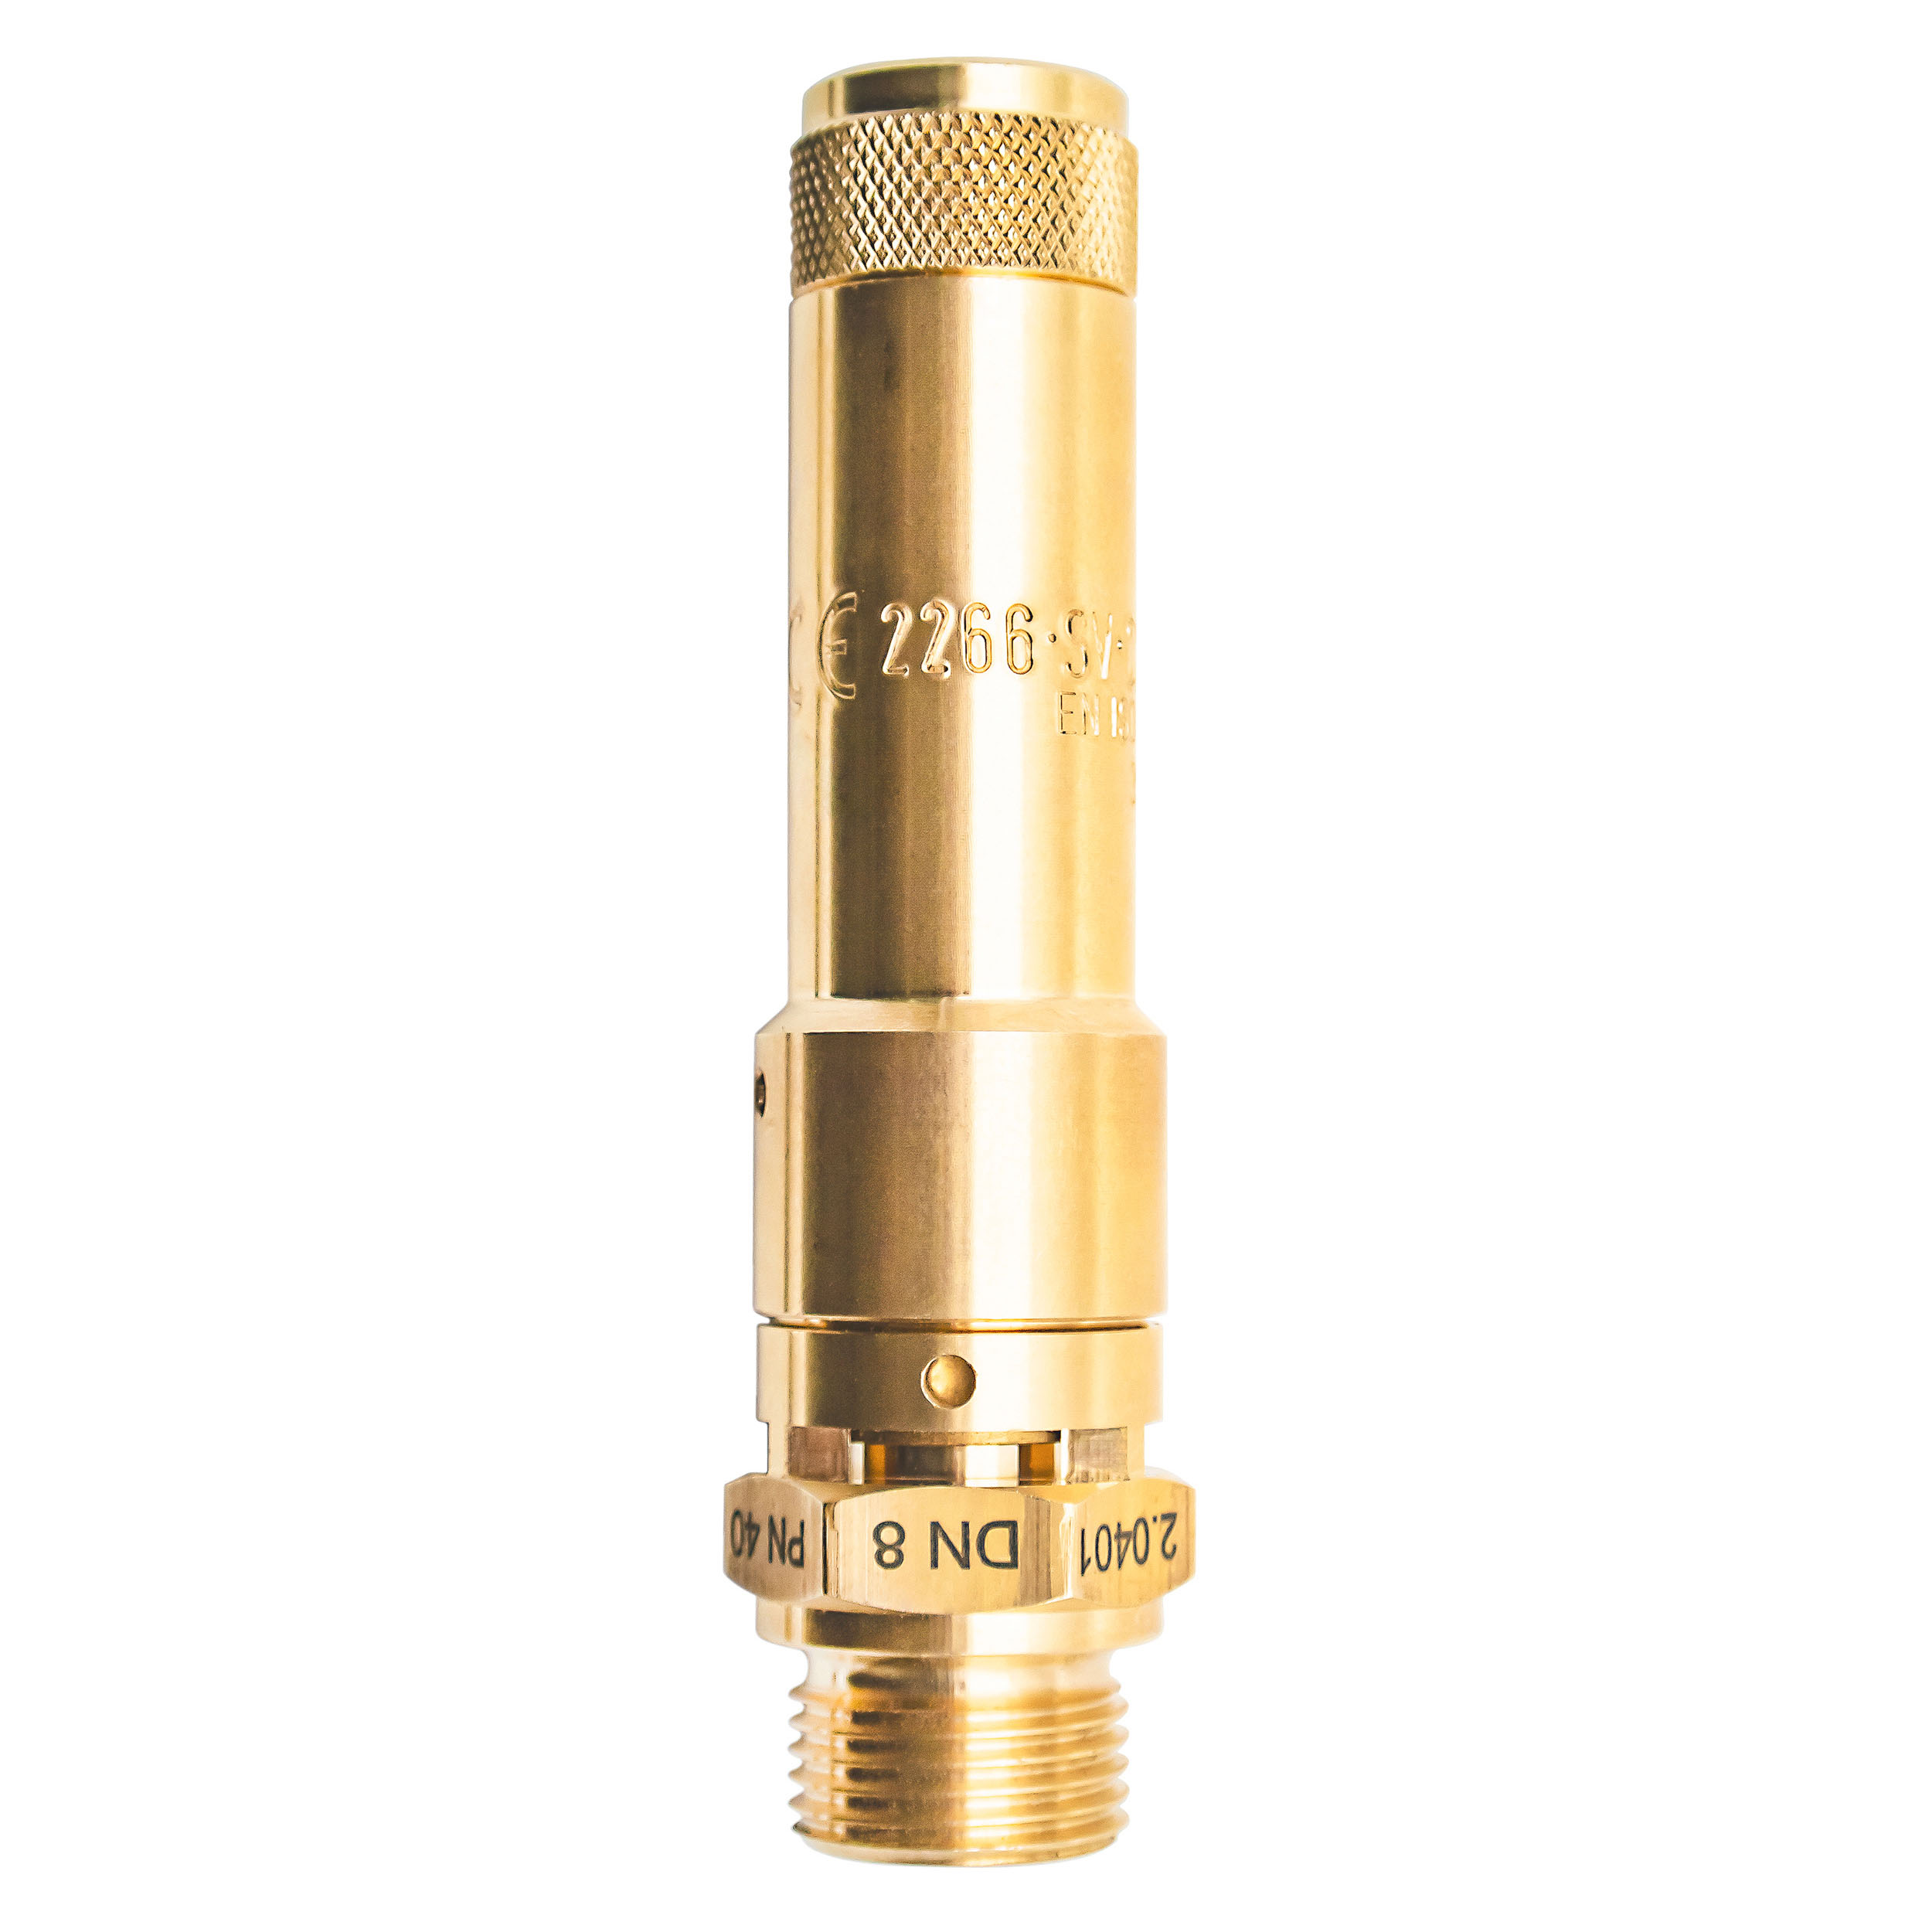 Savety valve component tested DN 8, G¼, set pressure: 4.3 bar (62,35 psi)